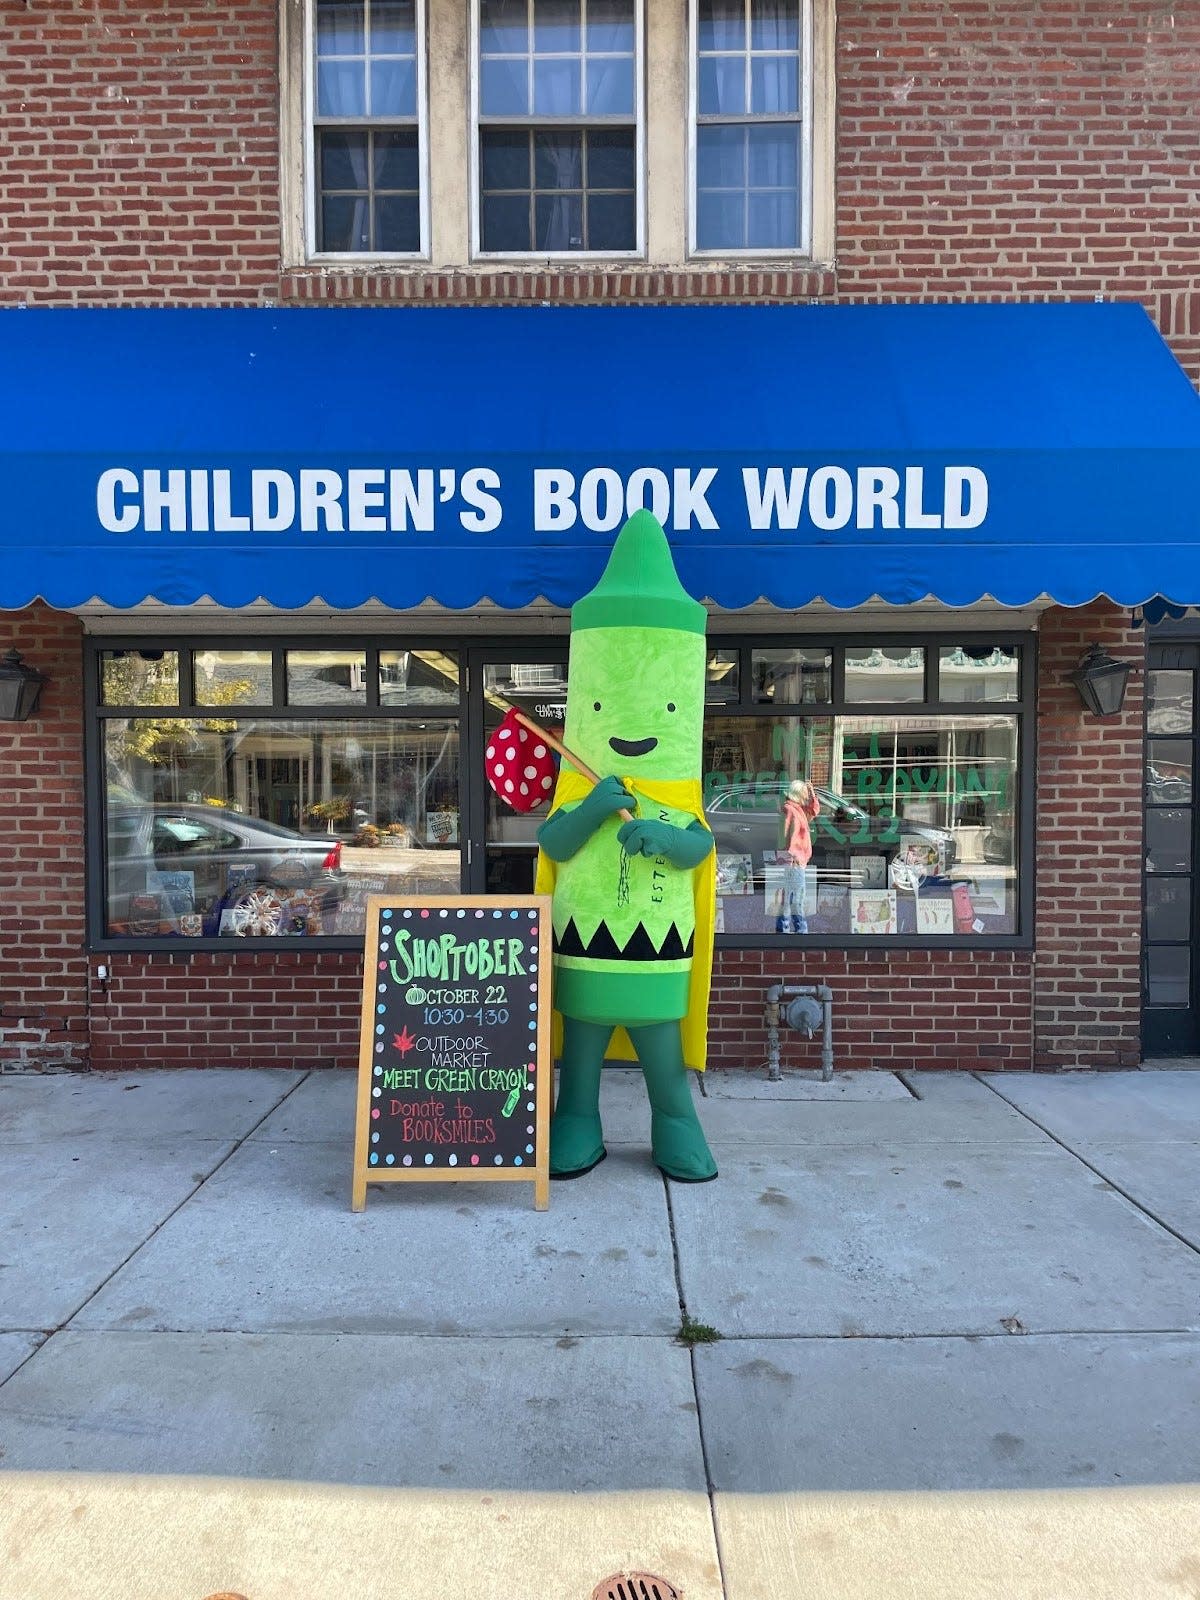 The welcoming front door of Children’s Book World in Haverford, Pennsylvania.